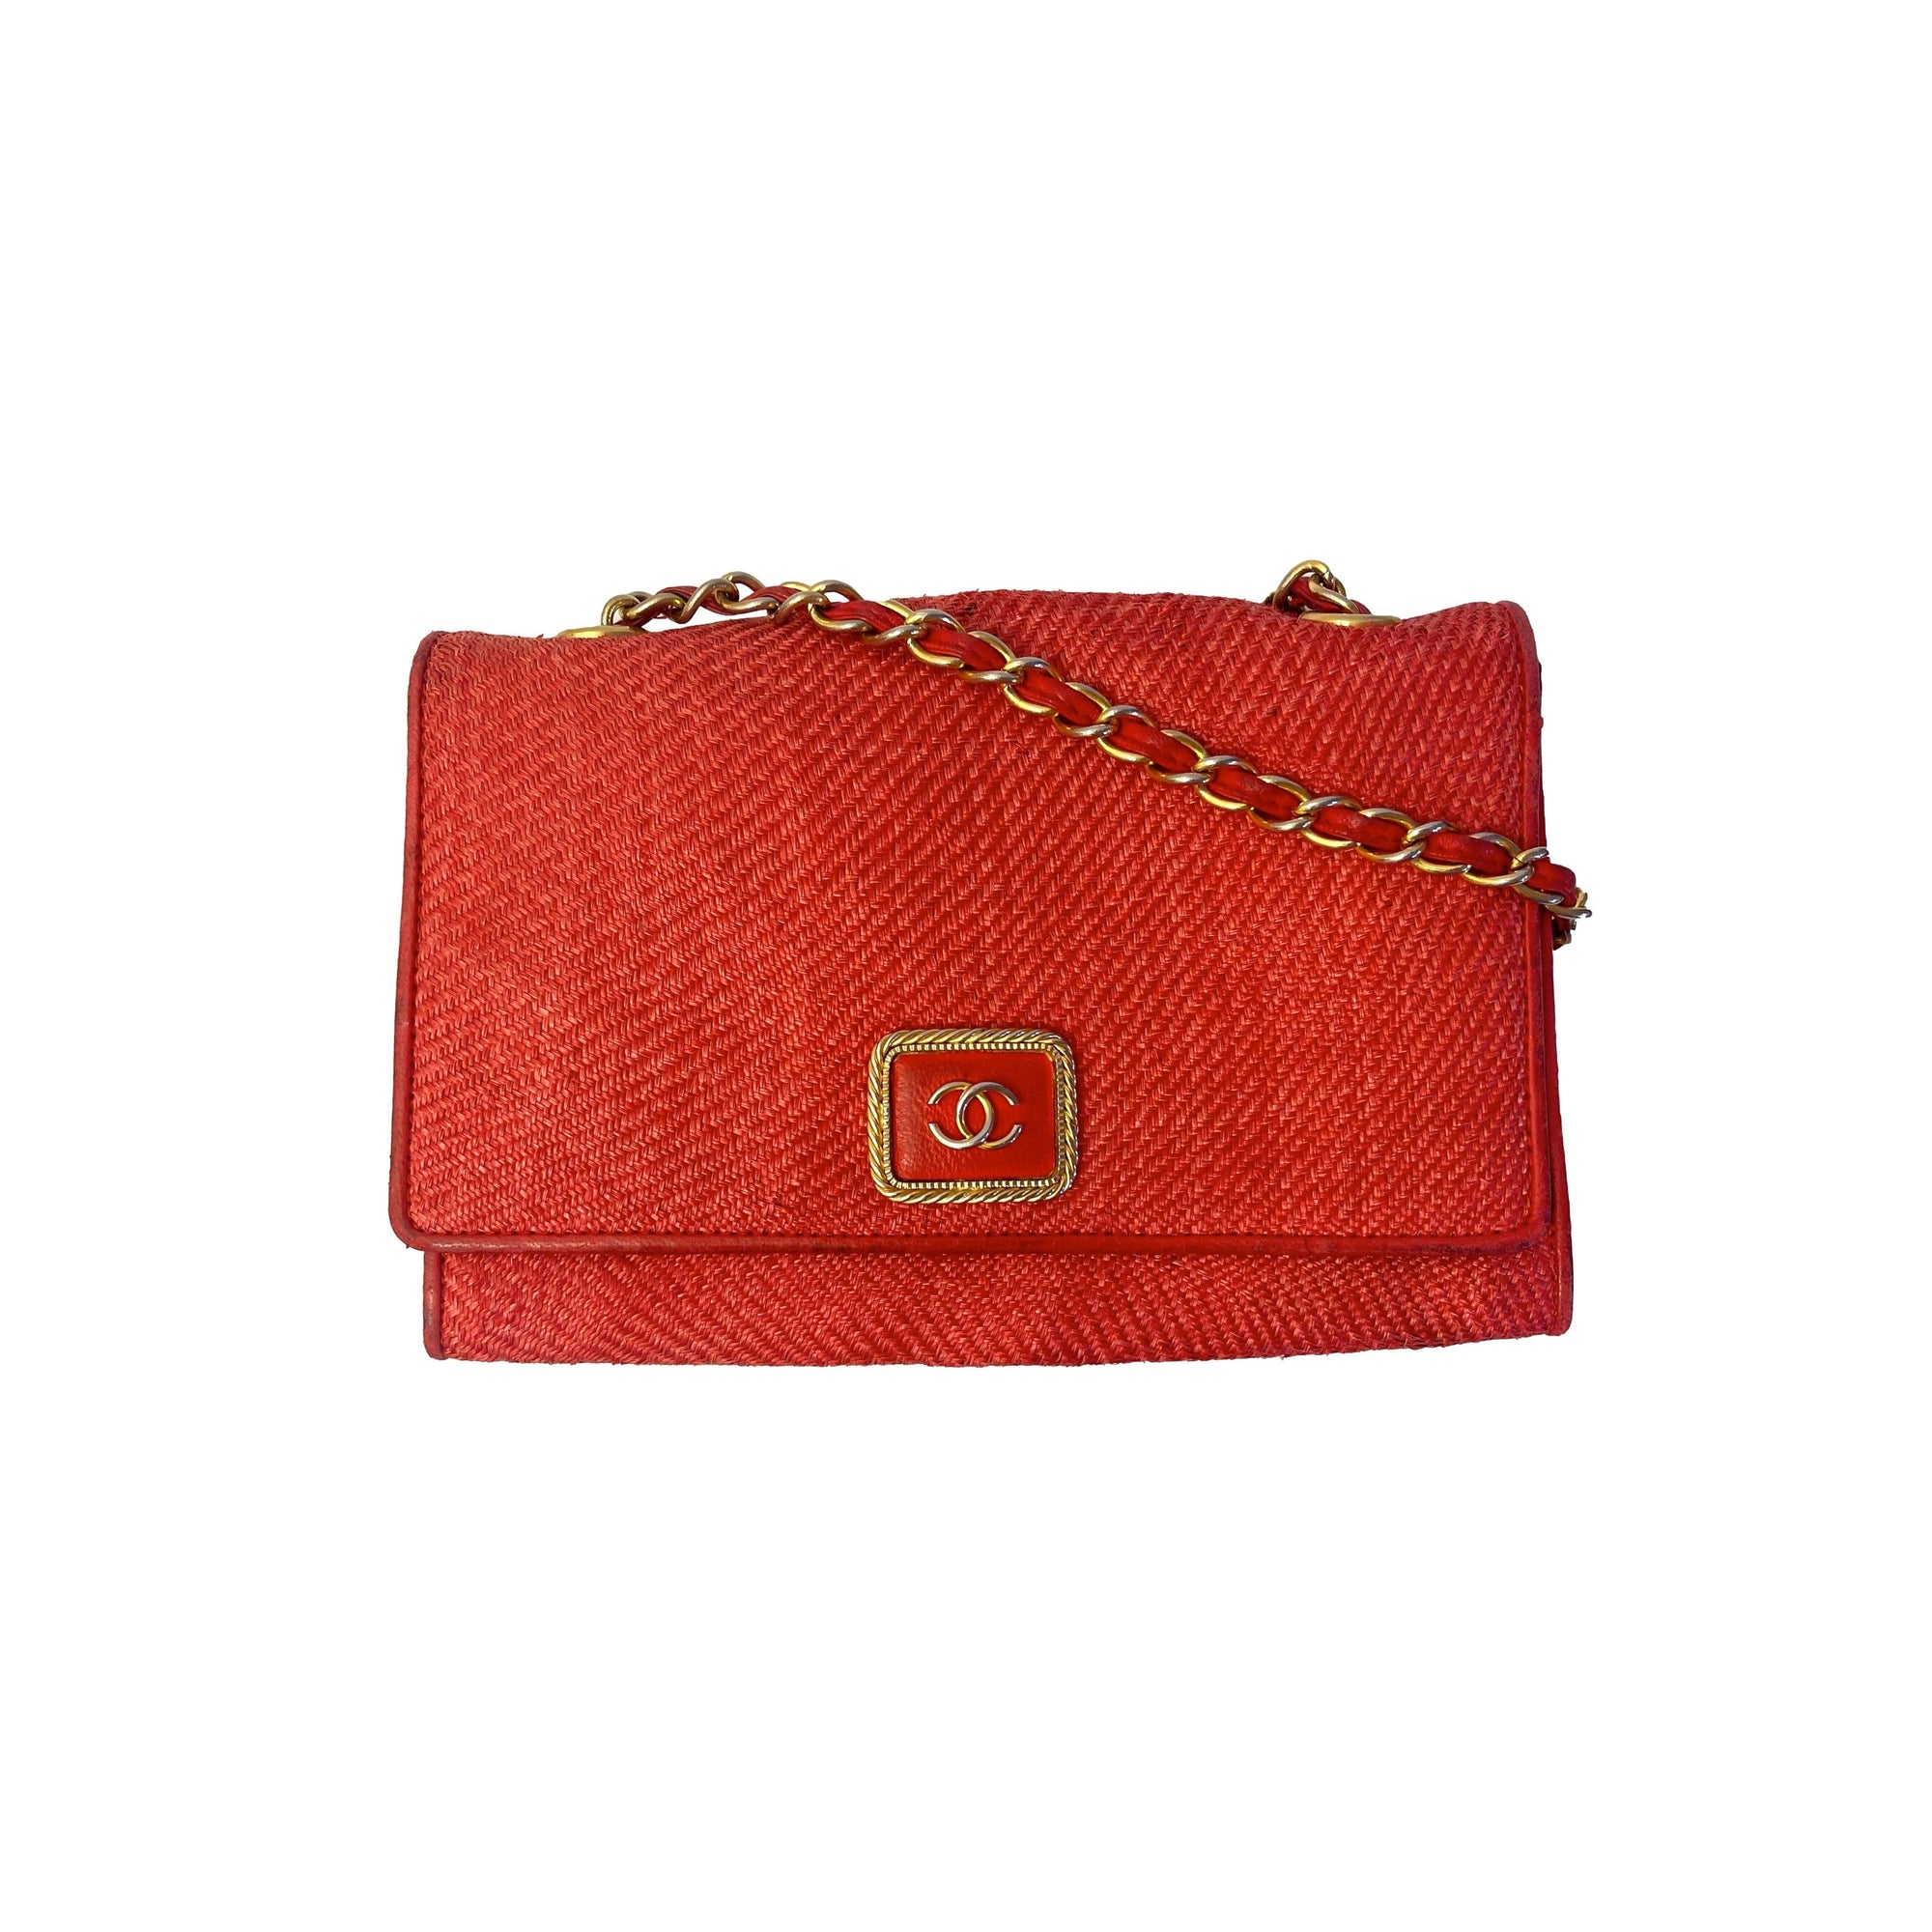 Chanel Red Woven Logo Chain Bag - Handbags